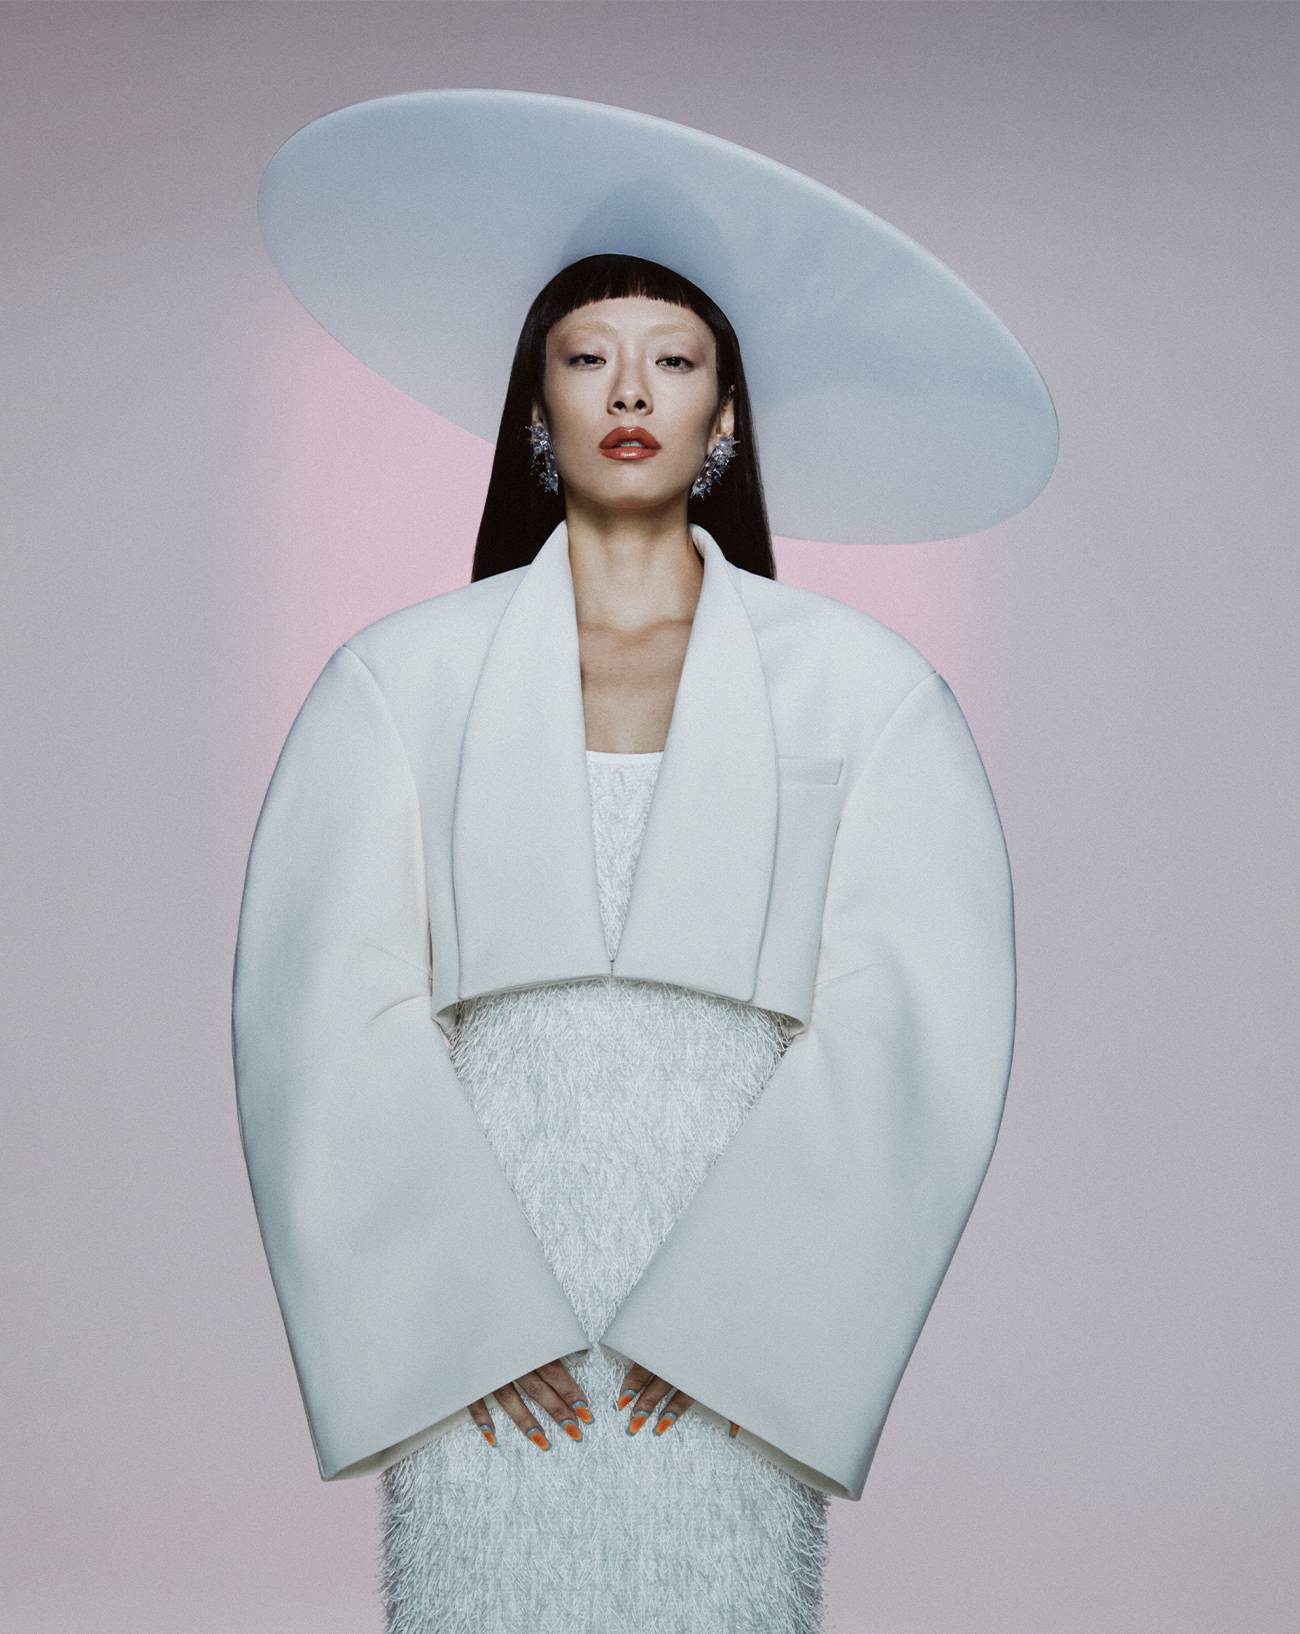 Fashion interview with avant-garde pop star Rina Sawayama